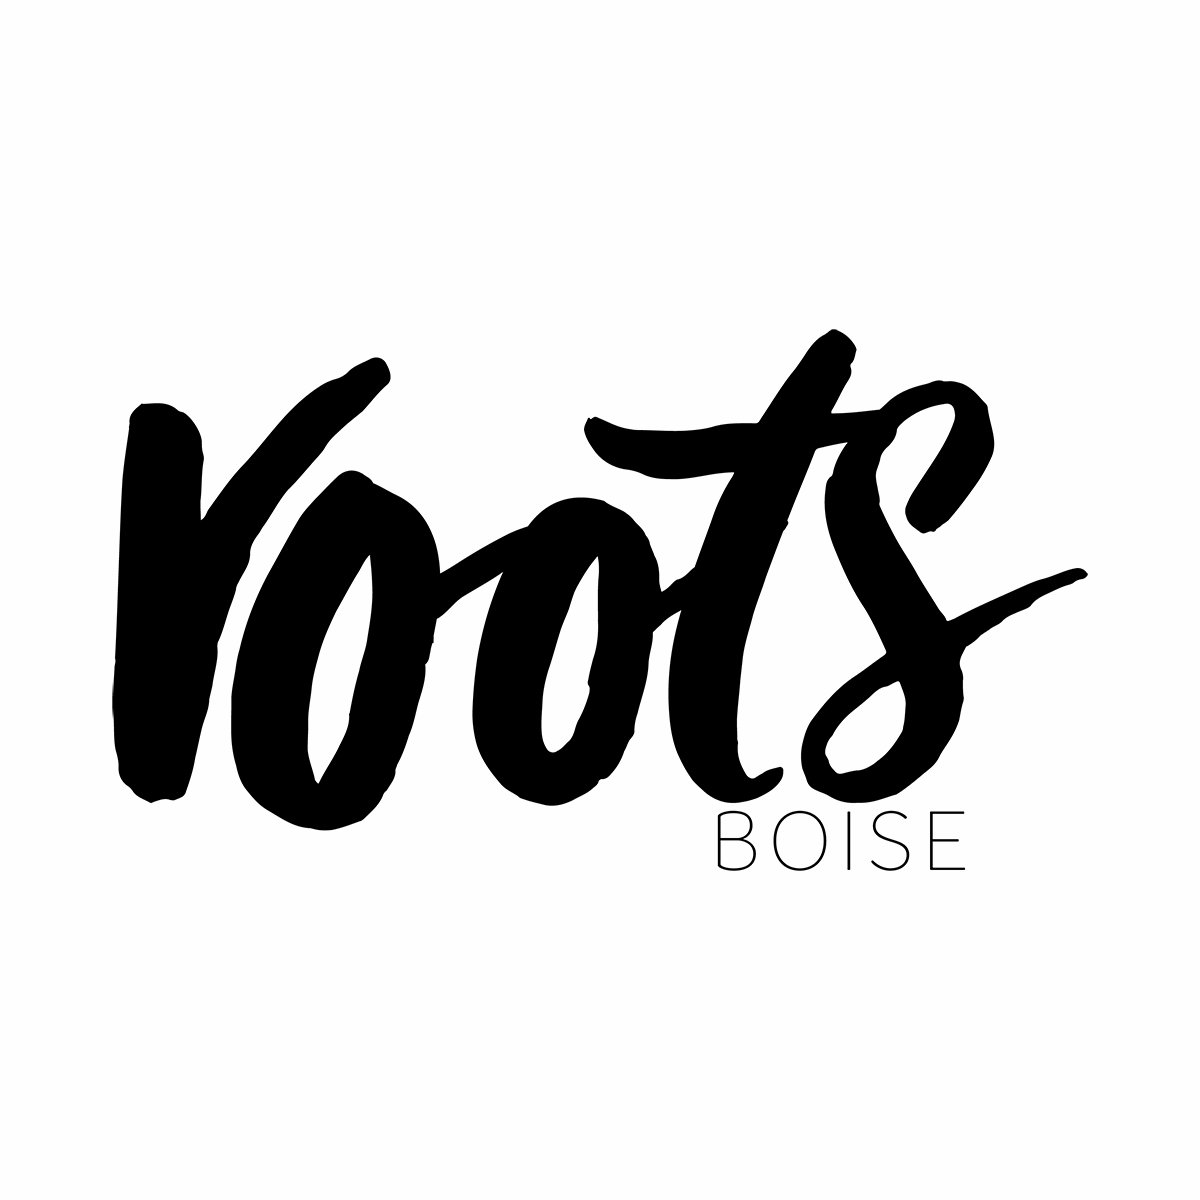 Roots Boise